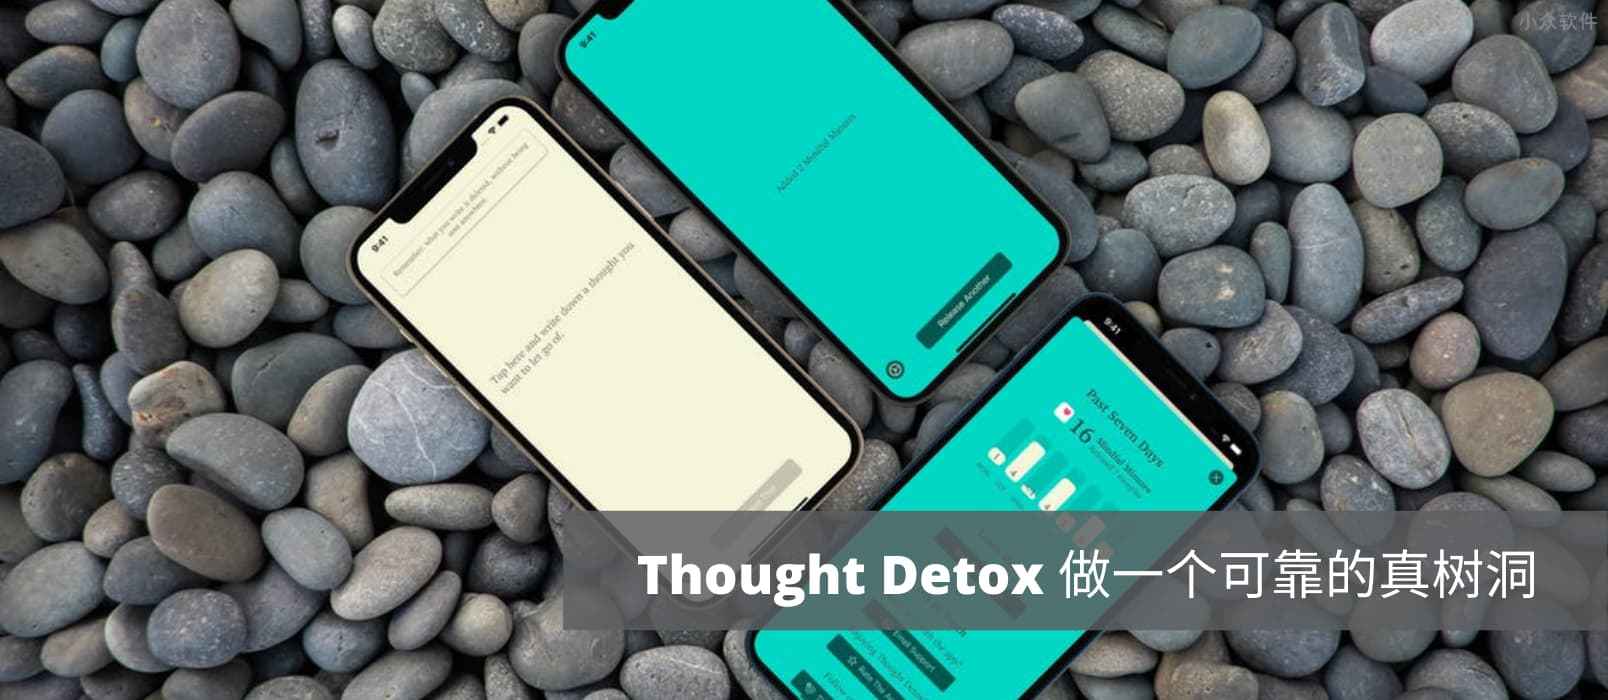 Thought Detox – 释放‬负面情绪，写后即焚，真树洞[iPhone]